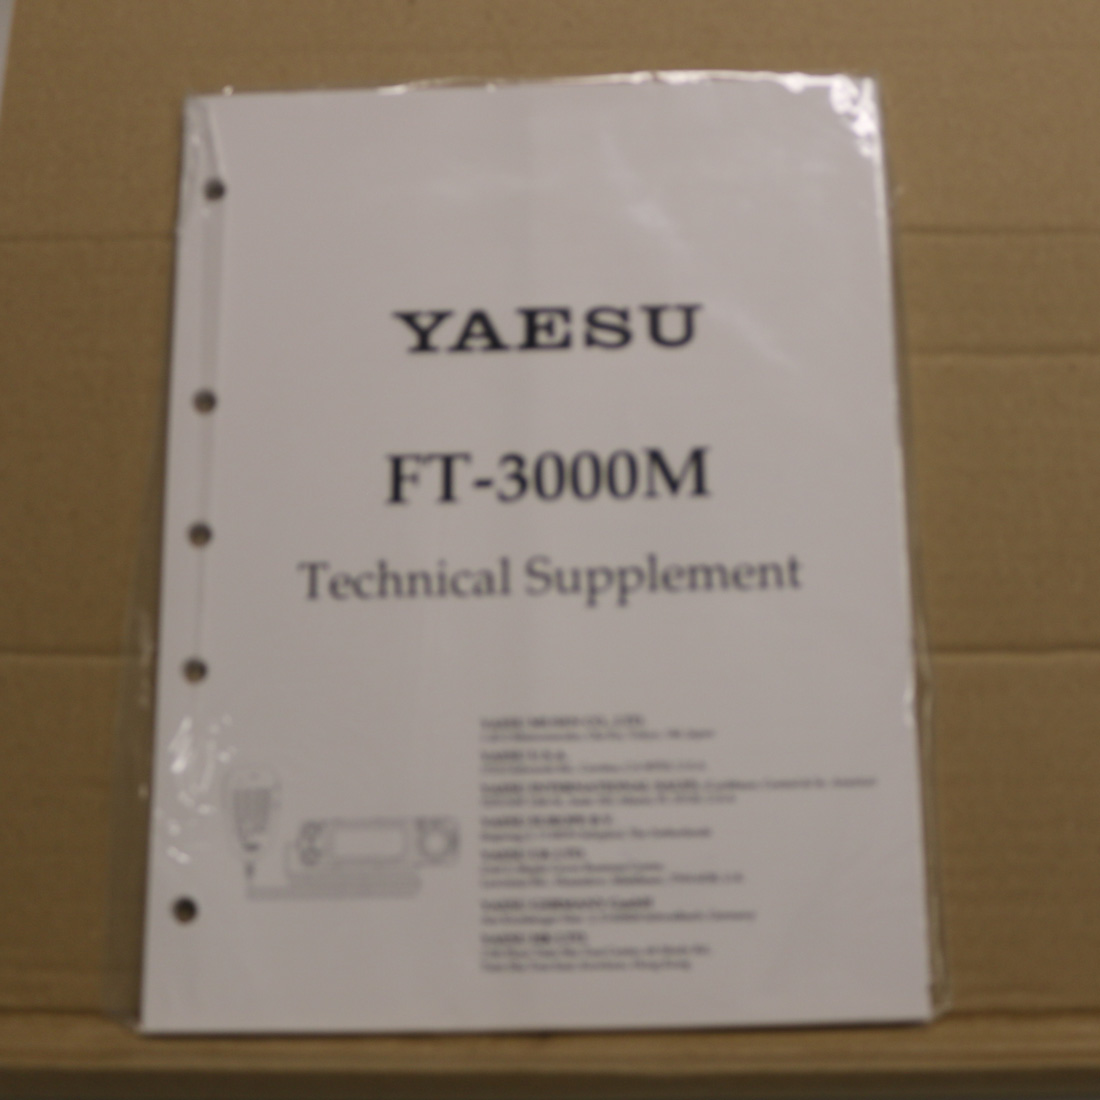 Yaesu FT-3000M Technical Supplement